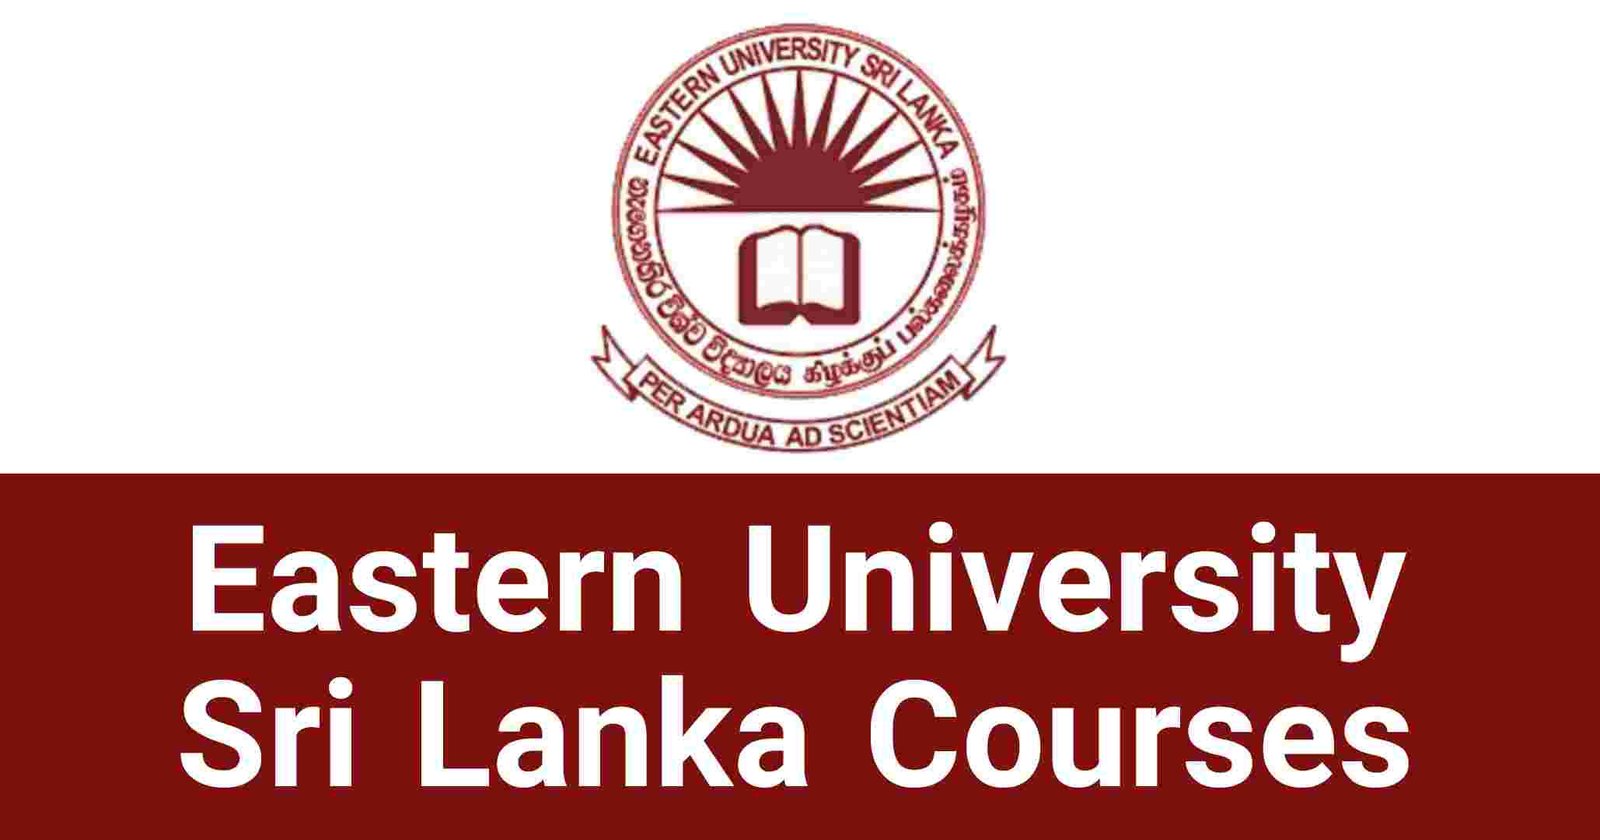 Eastern University Sri Lanka Courses